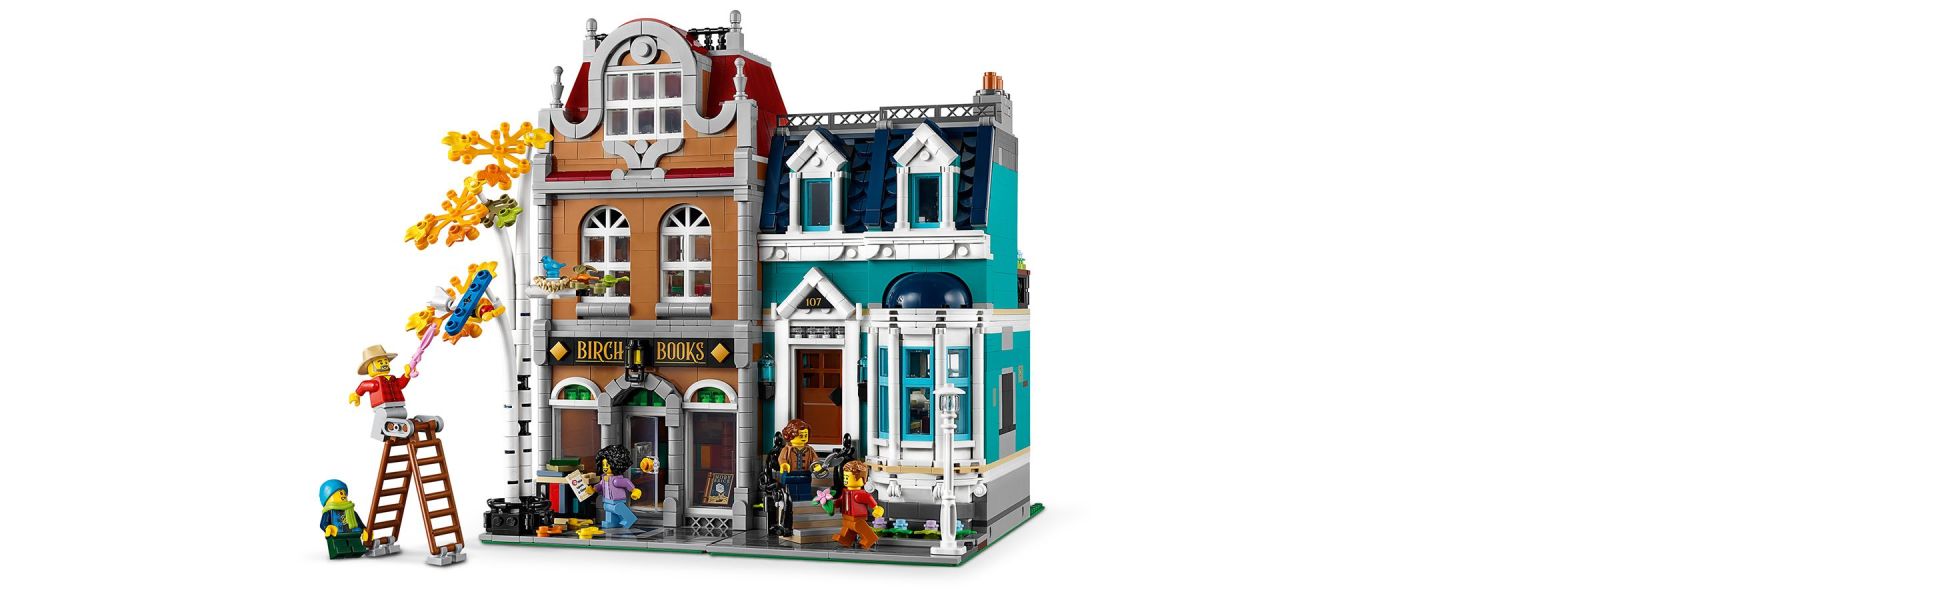 LEGO Creator Expert Bookshop 10270 Modular Building, Home Décor